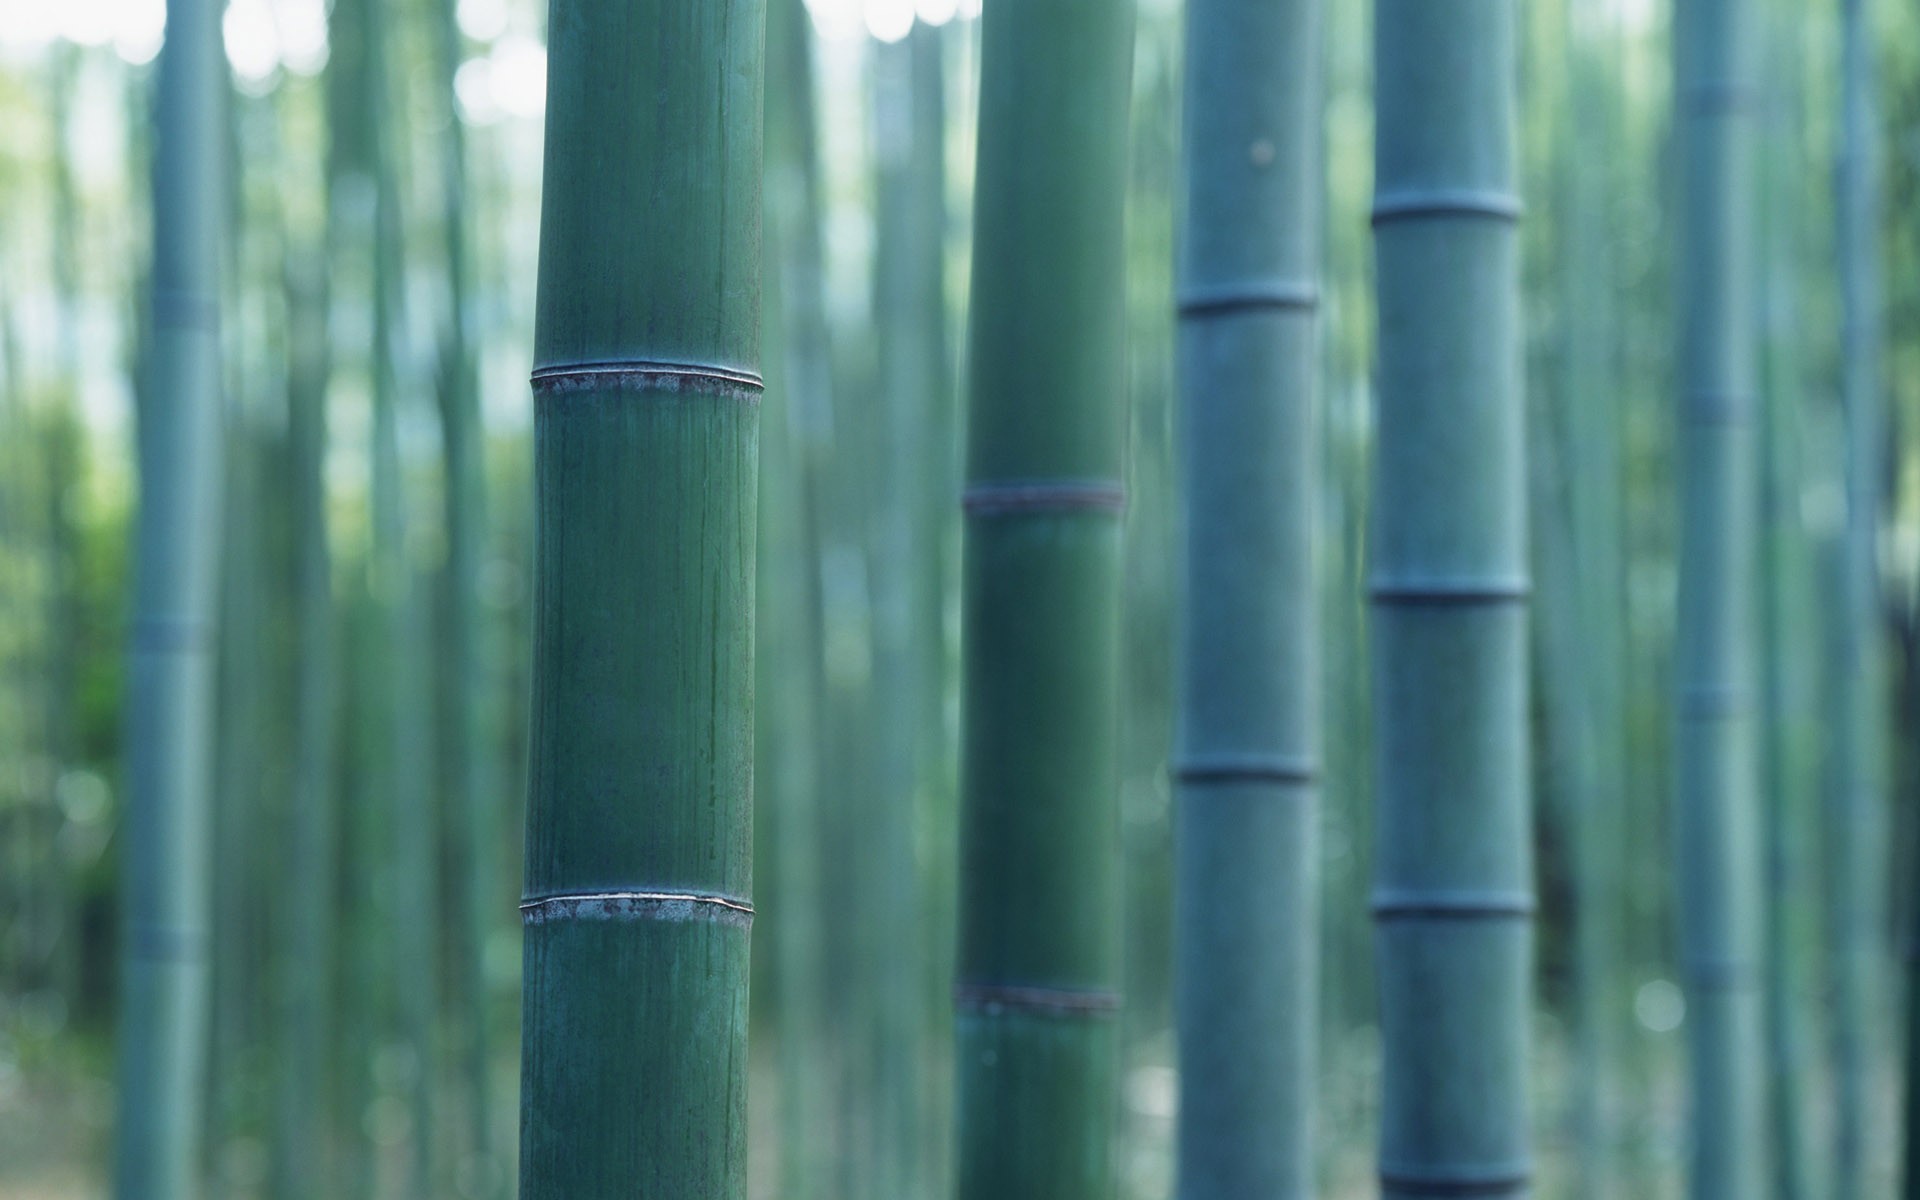 bamboo Wallpaper